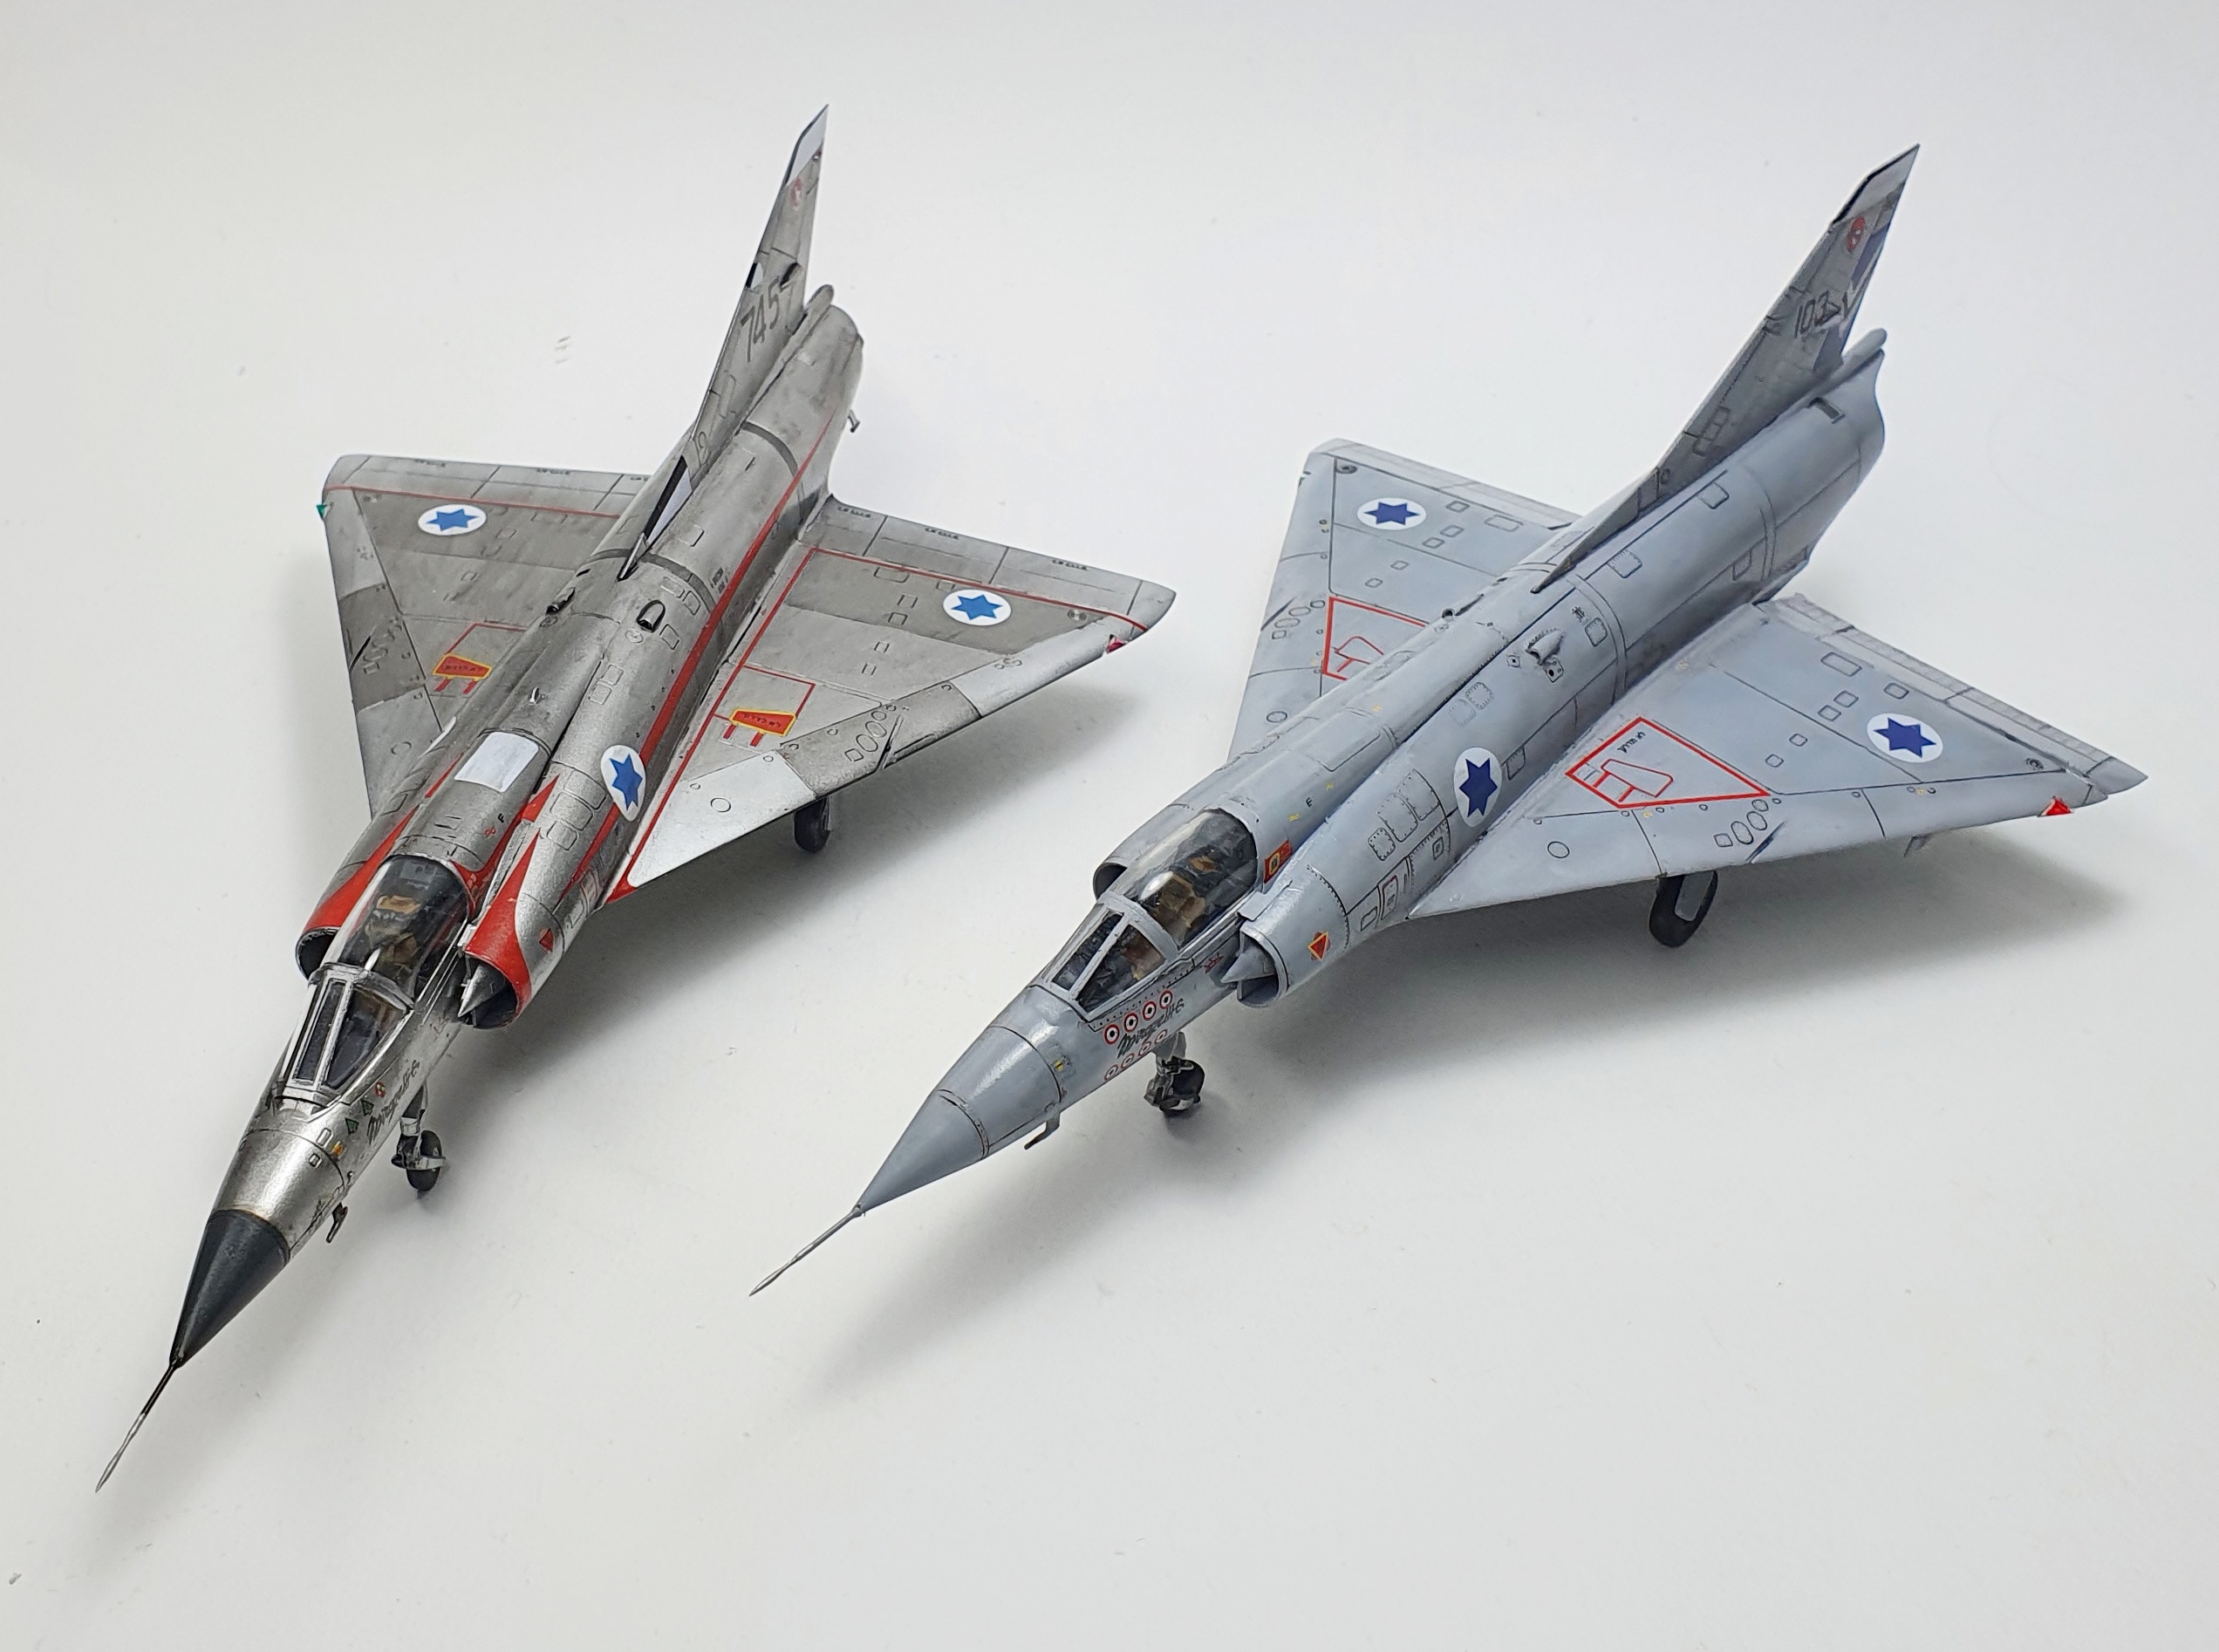 [Modelsvit VS Special Hobby] Mirage IIICJ au 1/72 20221109_161758-01